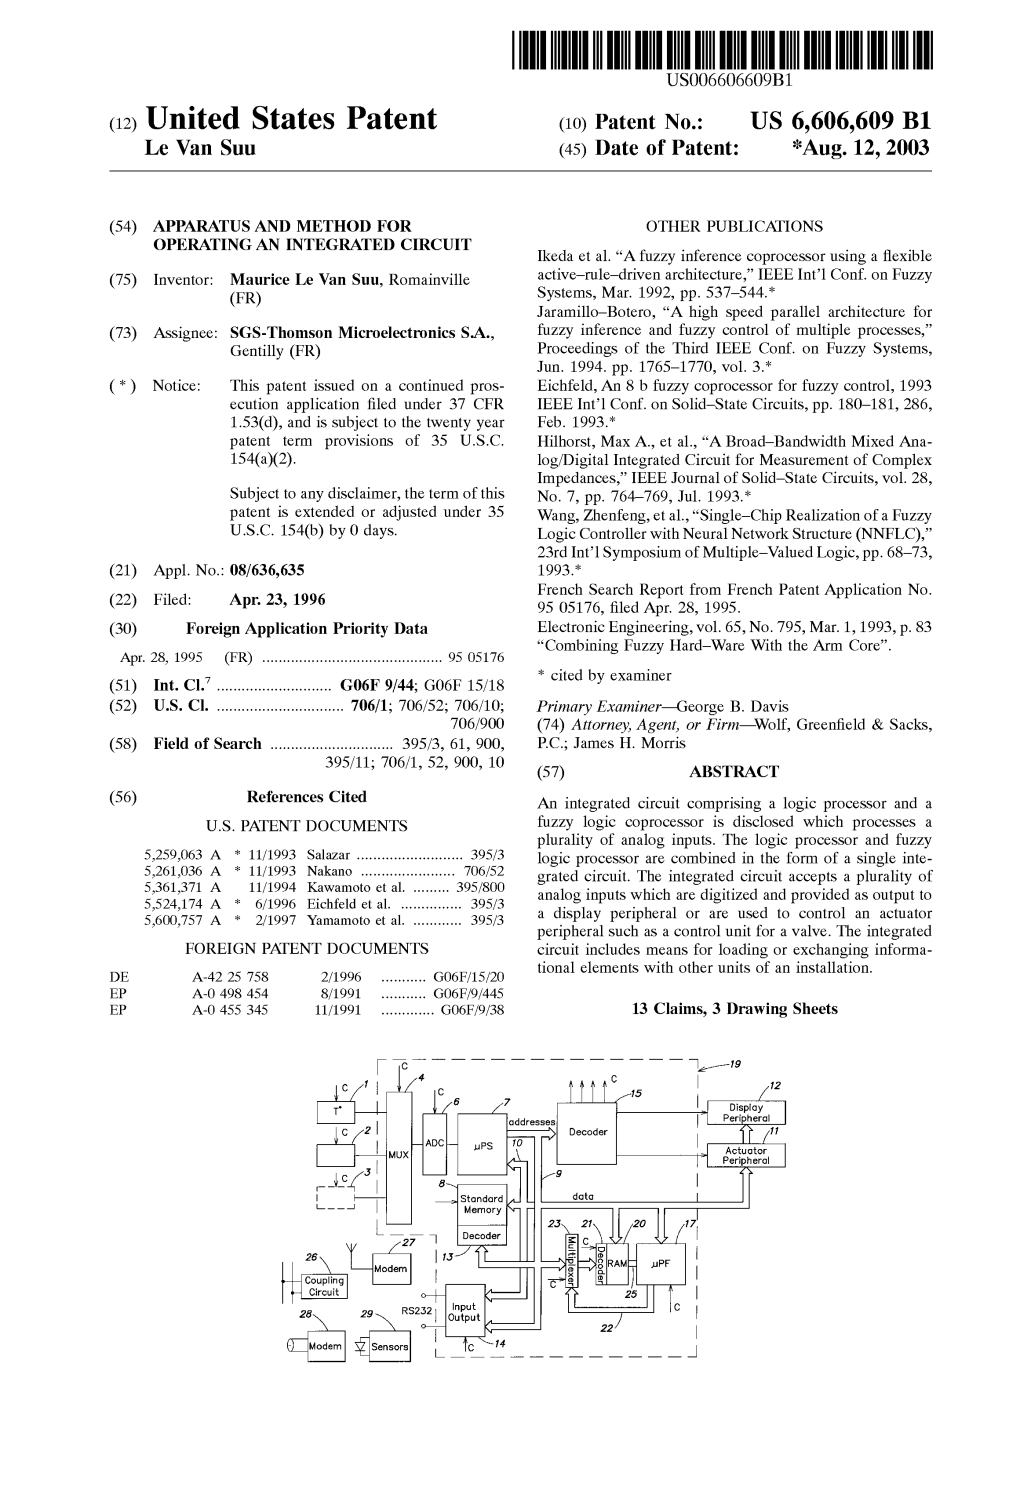 (12) United States Patent (10) Patent No.: US 6,606,609 B1 Le Van Suu (45) Date of Patent: *Aug